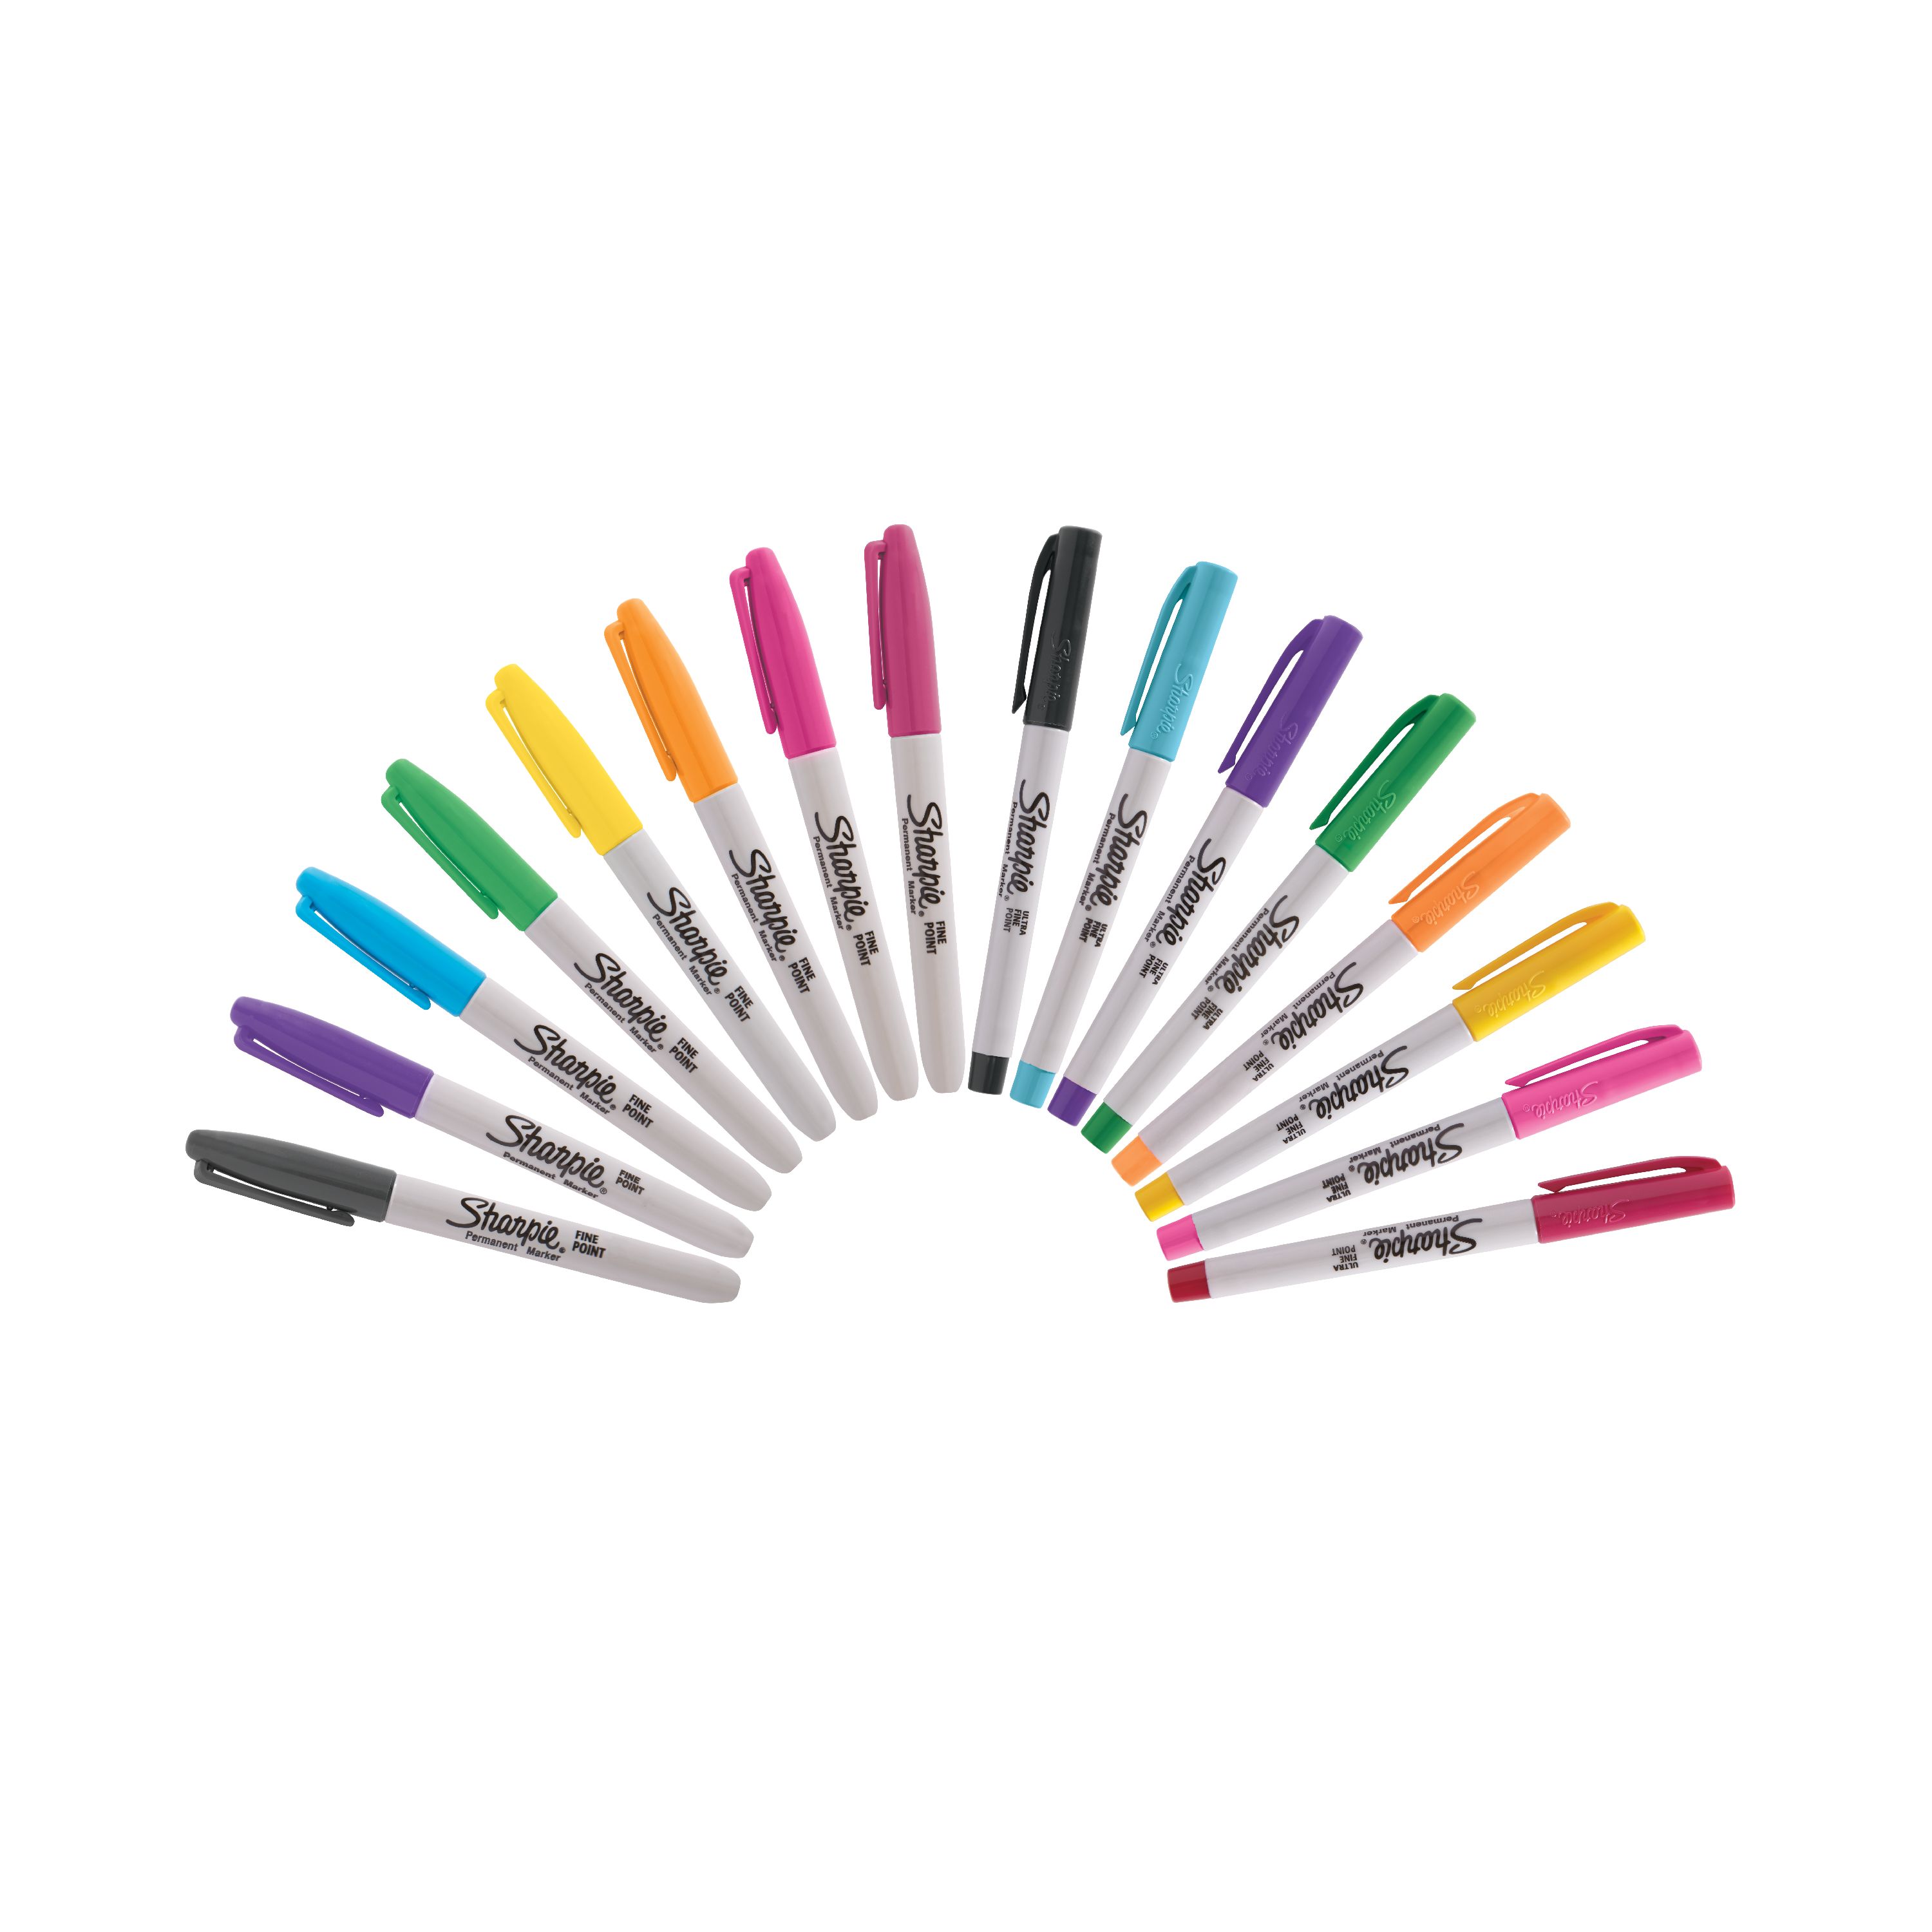 Sharpie Permanent Marker Limited Edition Set, Exclusive Color Assortment, plus 6 Bonus Coloring Sheets, 36 Count - image 6 of 9